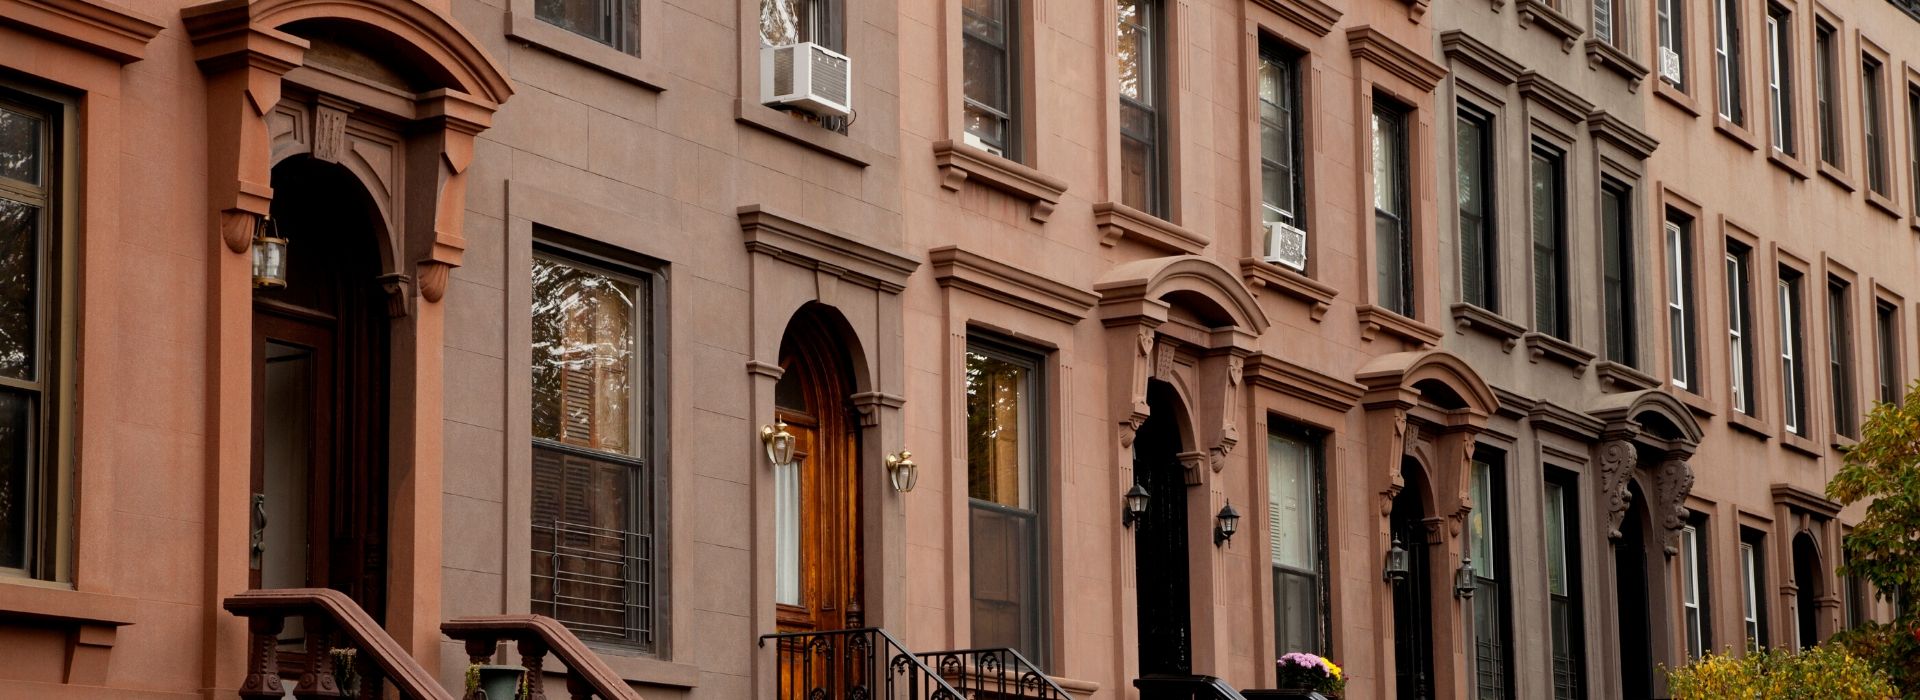 New York | We Buy Houses - AJ Developers Group